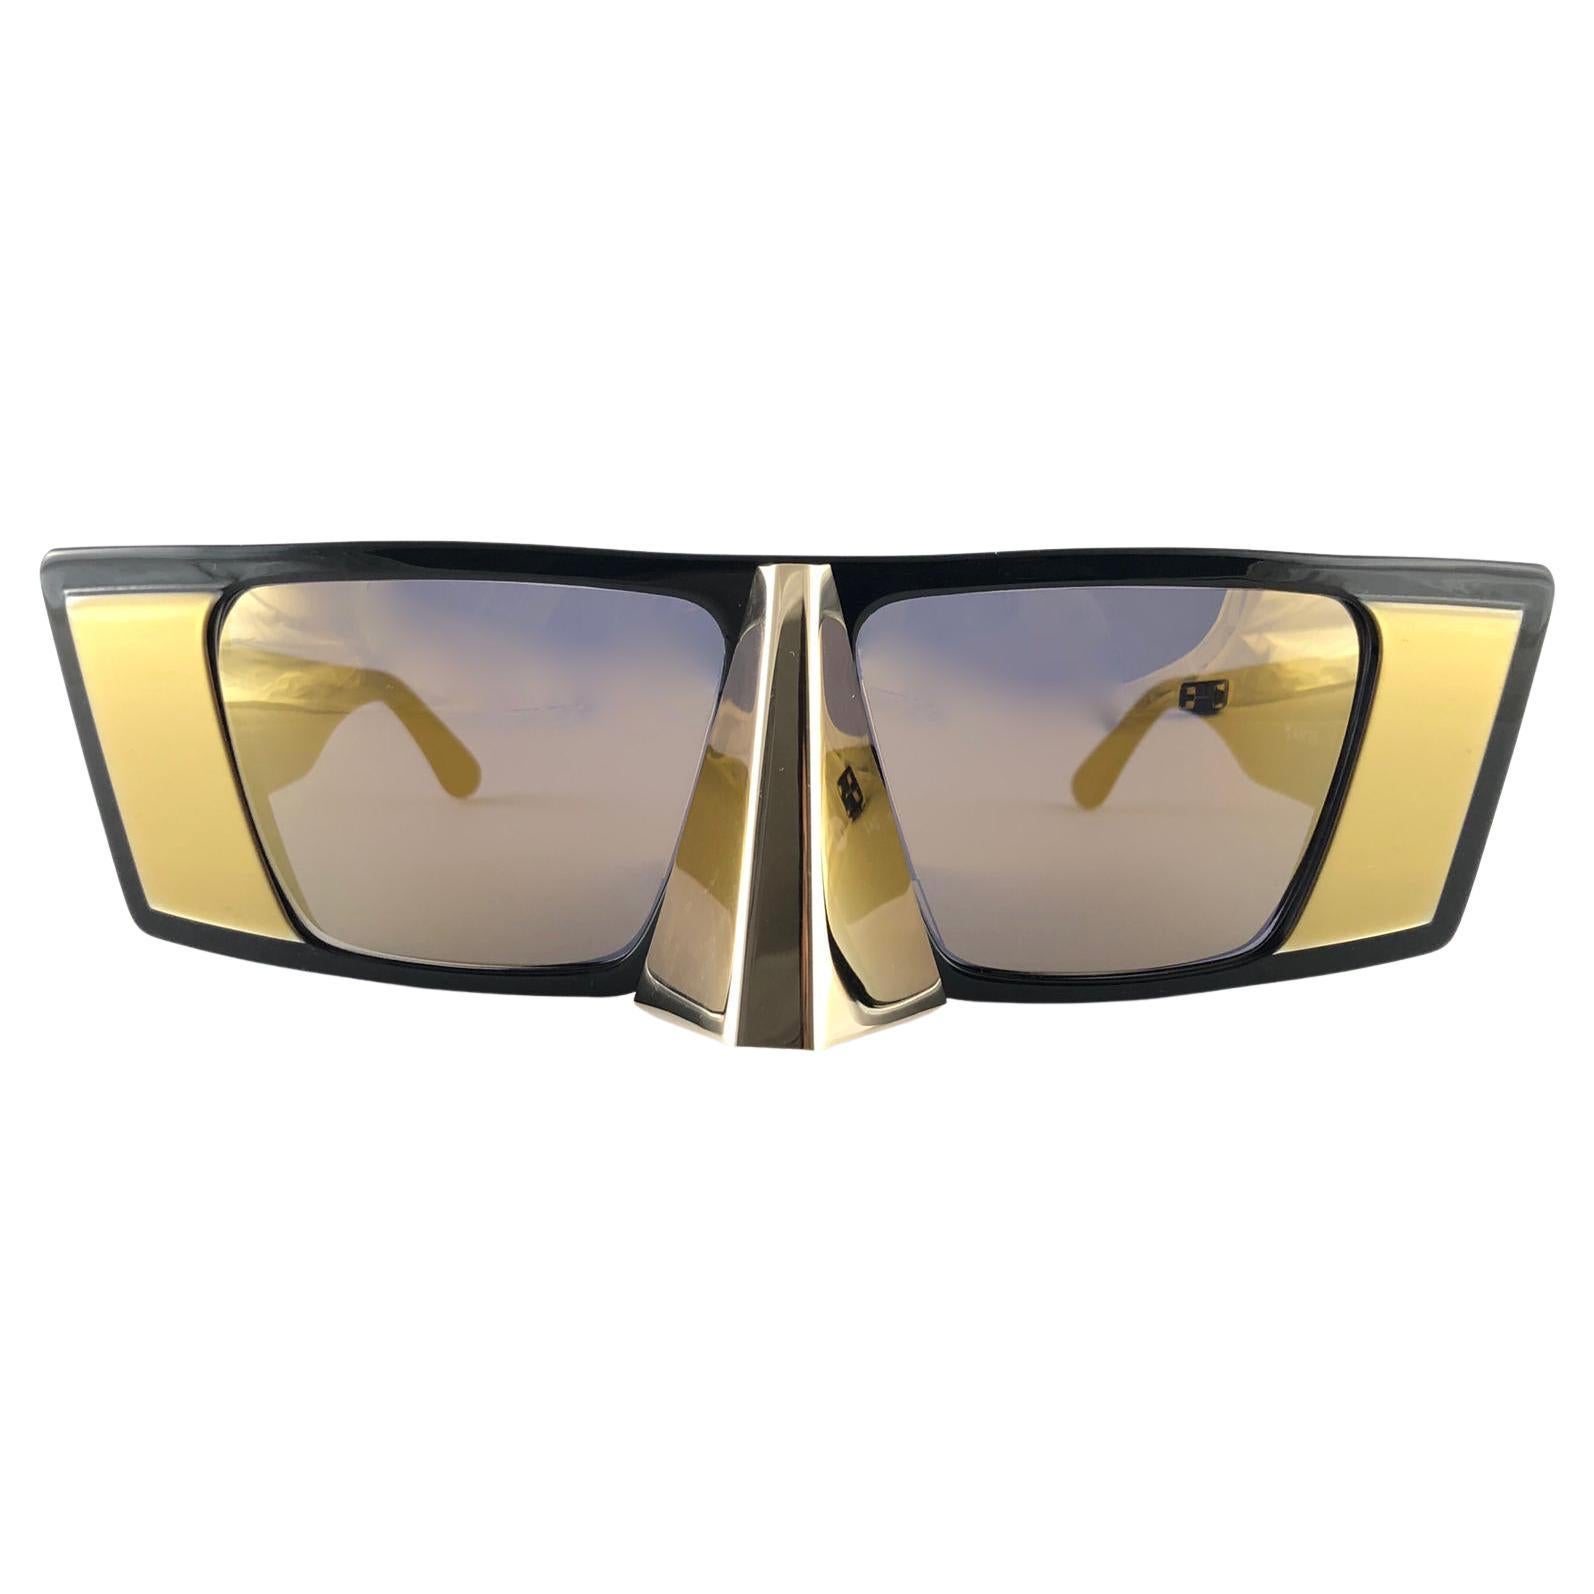 Vintage Rare Collector Alain Mikli AM 88 Nose Guard Avantgarde Sunglasses 1988 For Sale